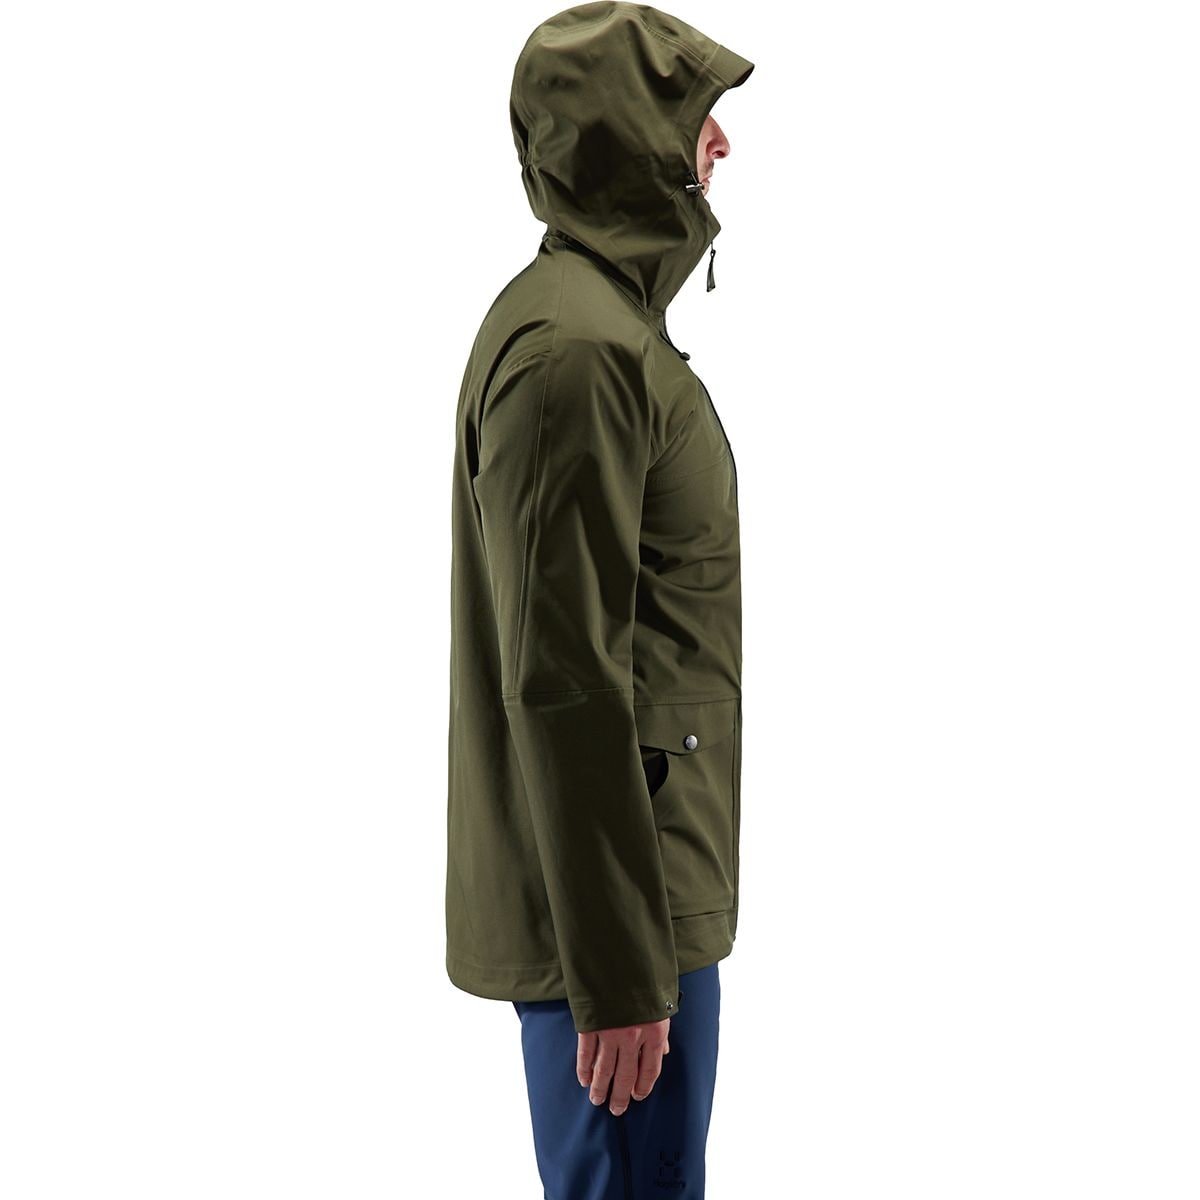 Haglofs Eco Proof Jacket - Men's - Clothing